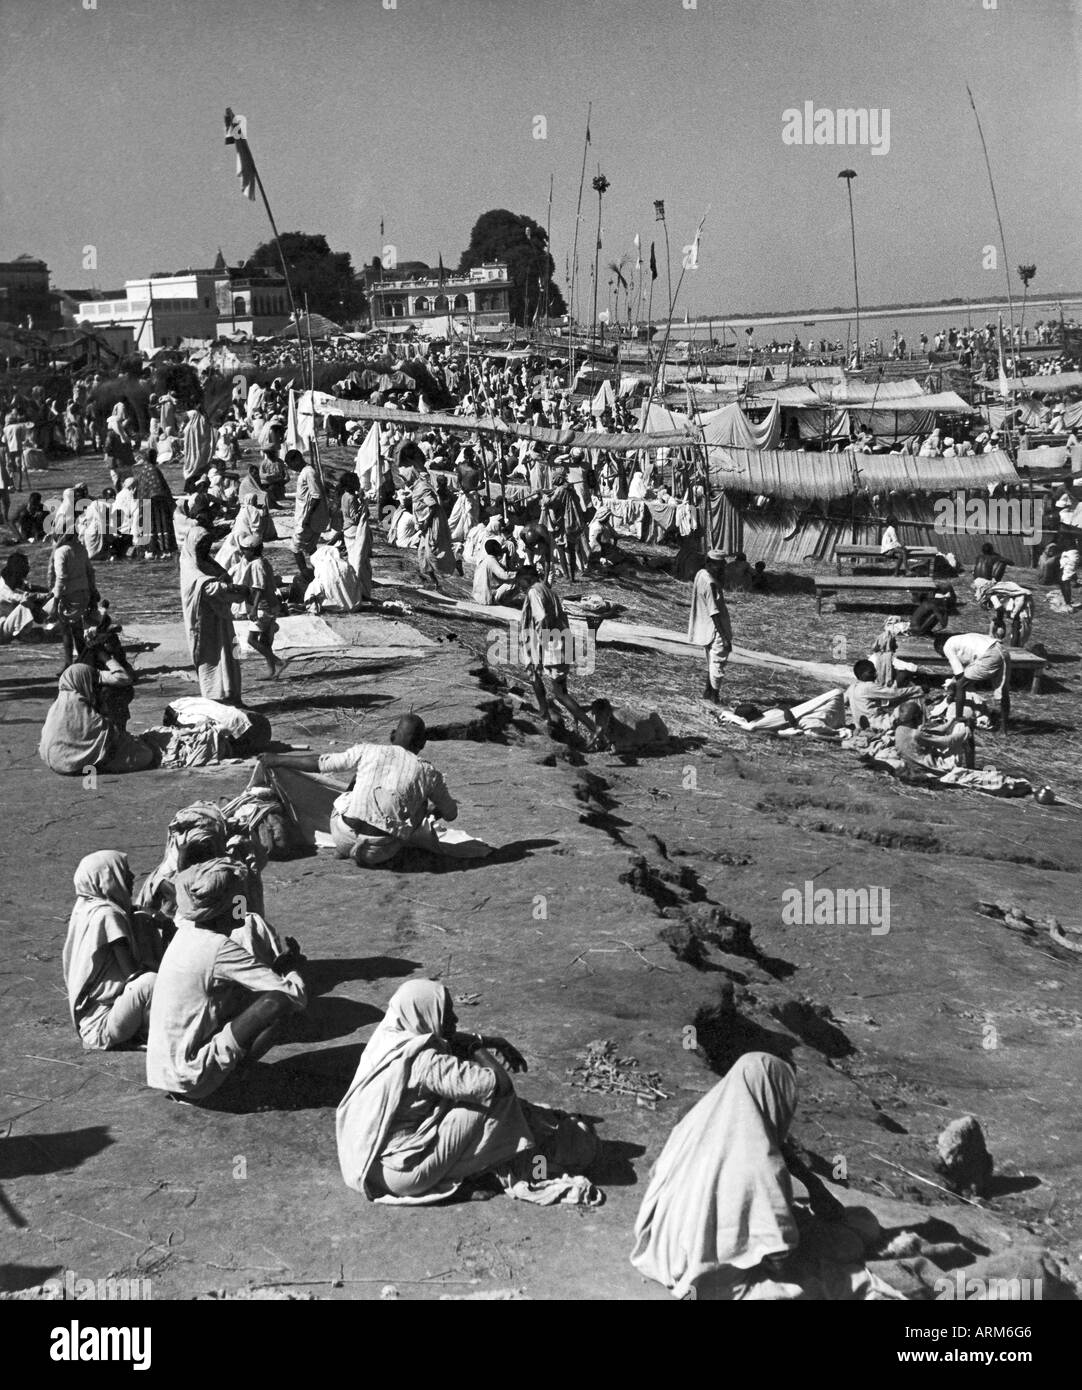 old vintage 1940s photo of Indian people sitting in summer heat with head covered, Banaras, Varanasi, Uttar Pradesh, India Stock Photo